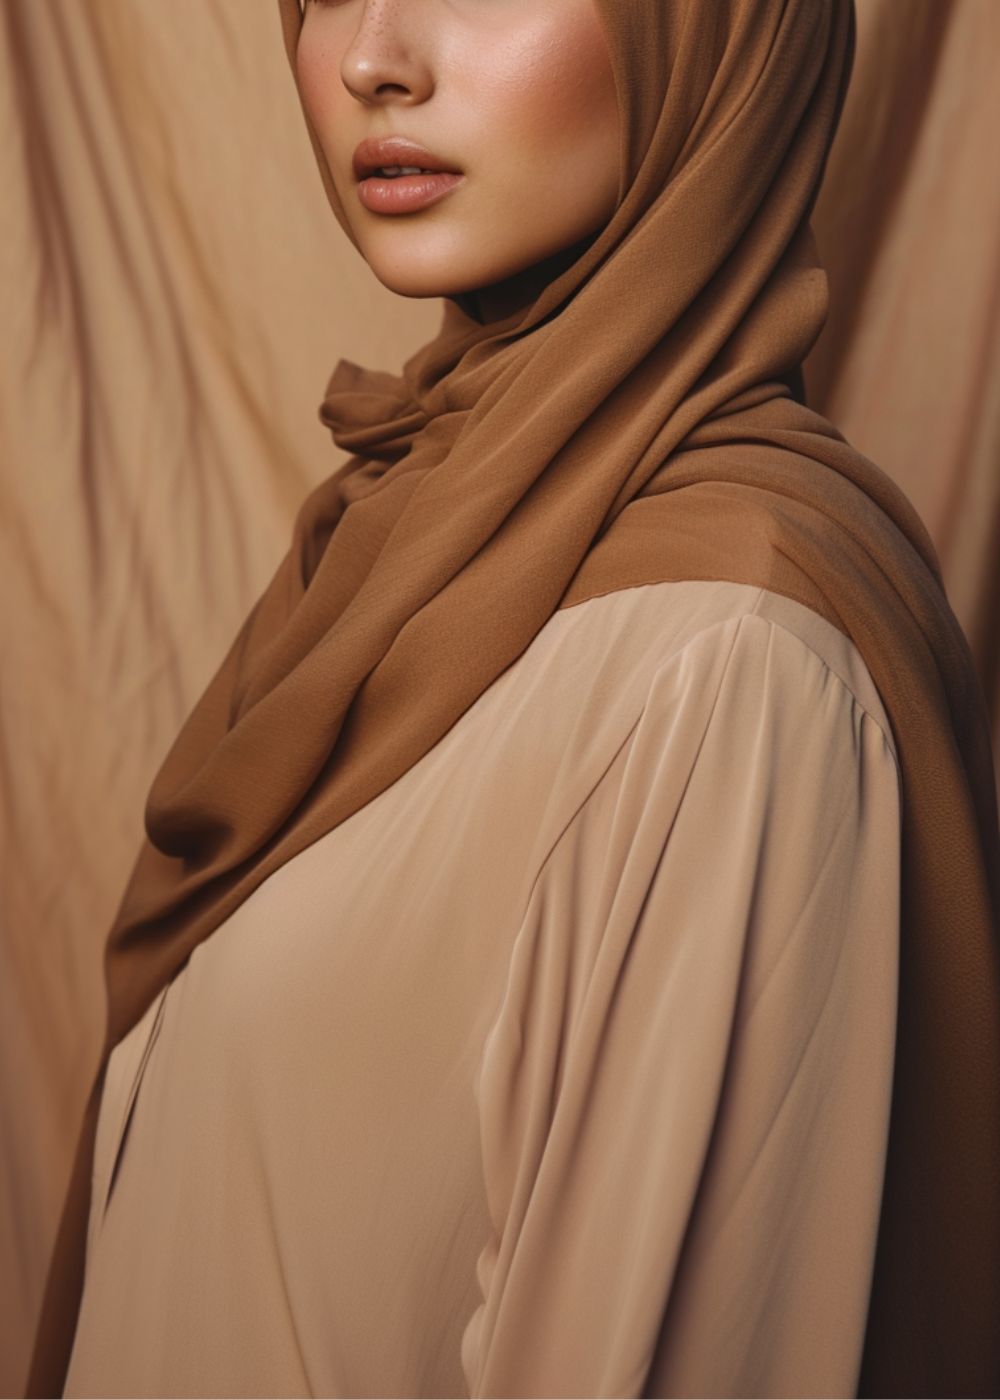 Textured Chiffon Baby Blue Hijab Scarf – Modestia Collection